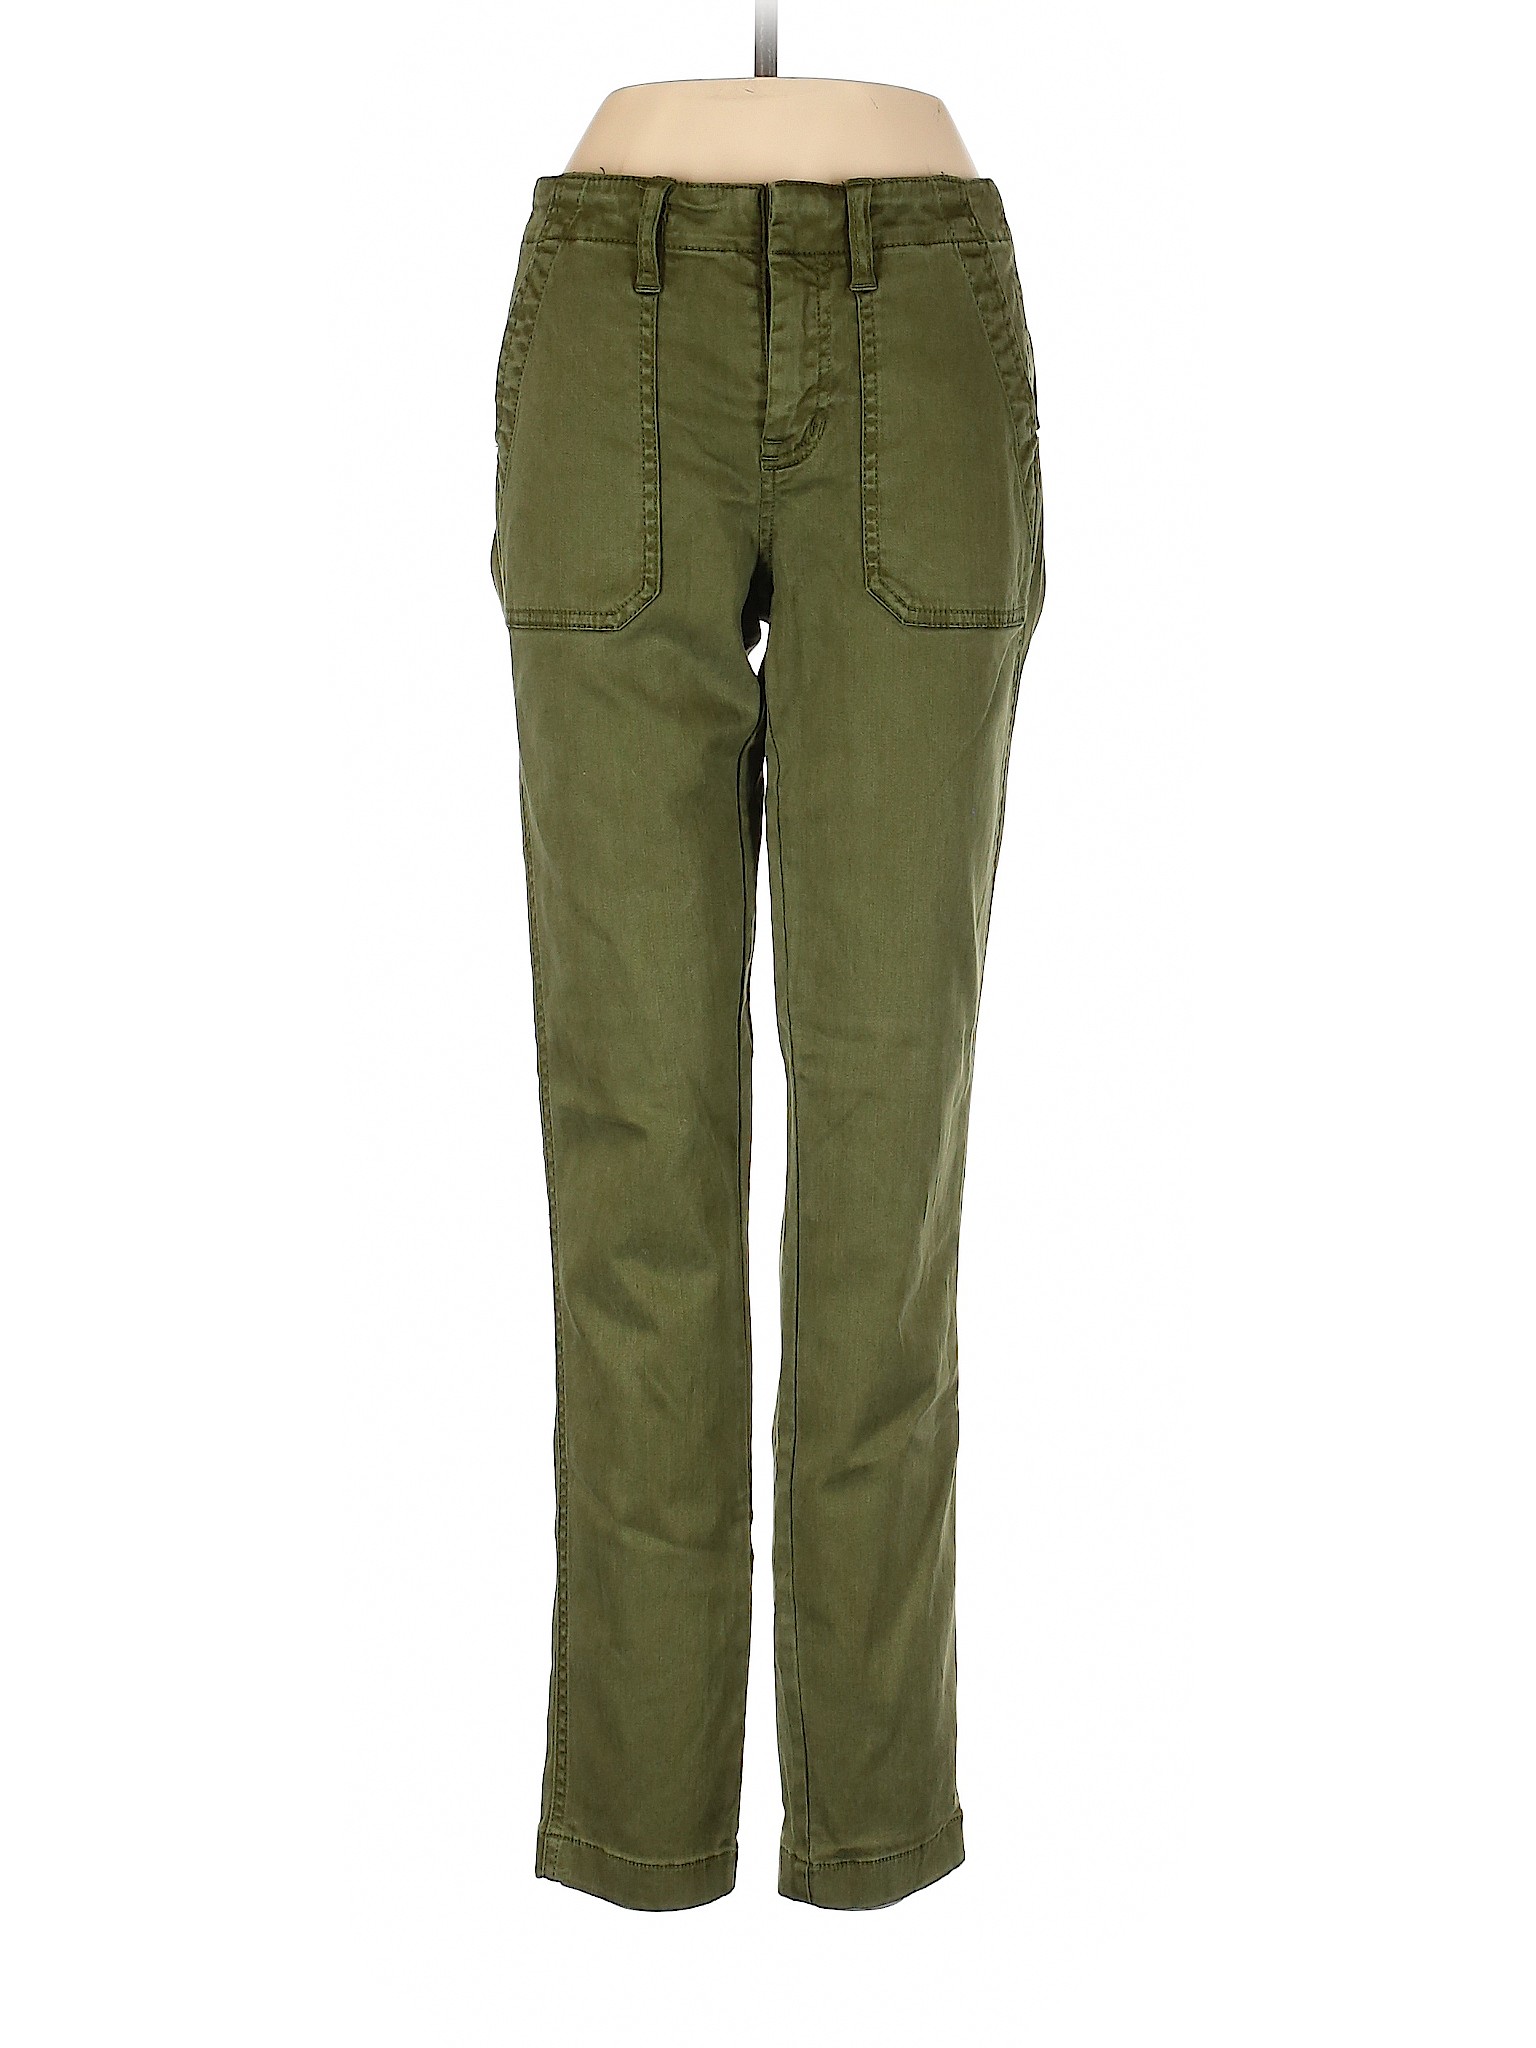 J. Crew Women Green Khakis 24W | eBay